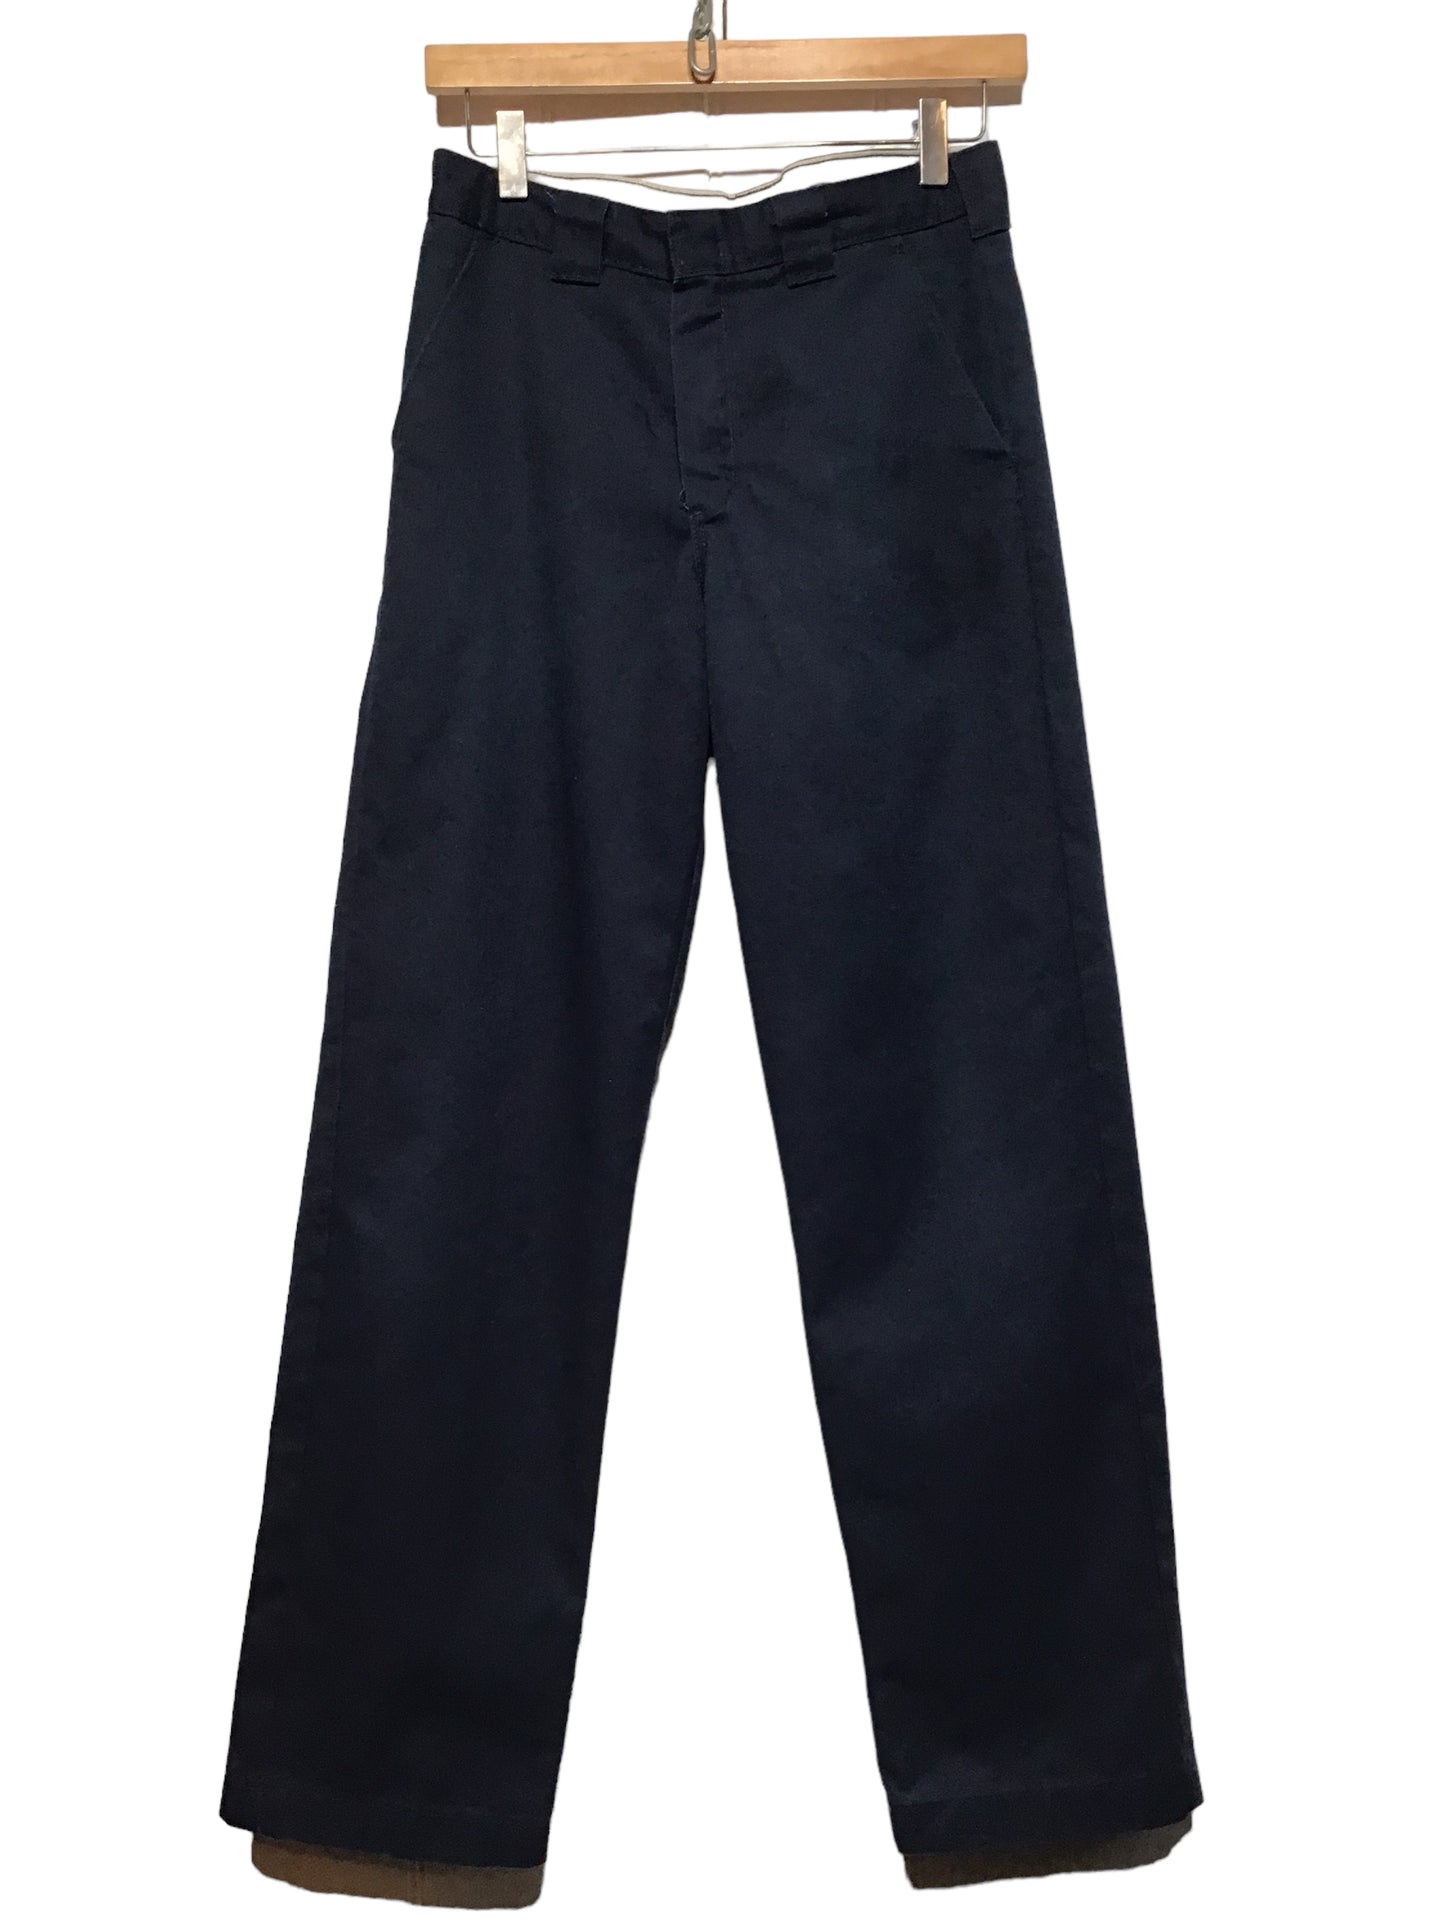 Dickies 874 Original Fit Navy Pants (28x28)